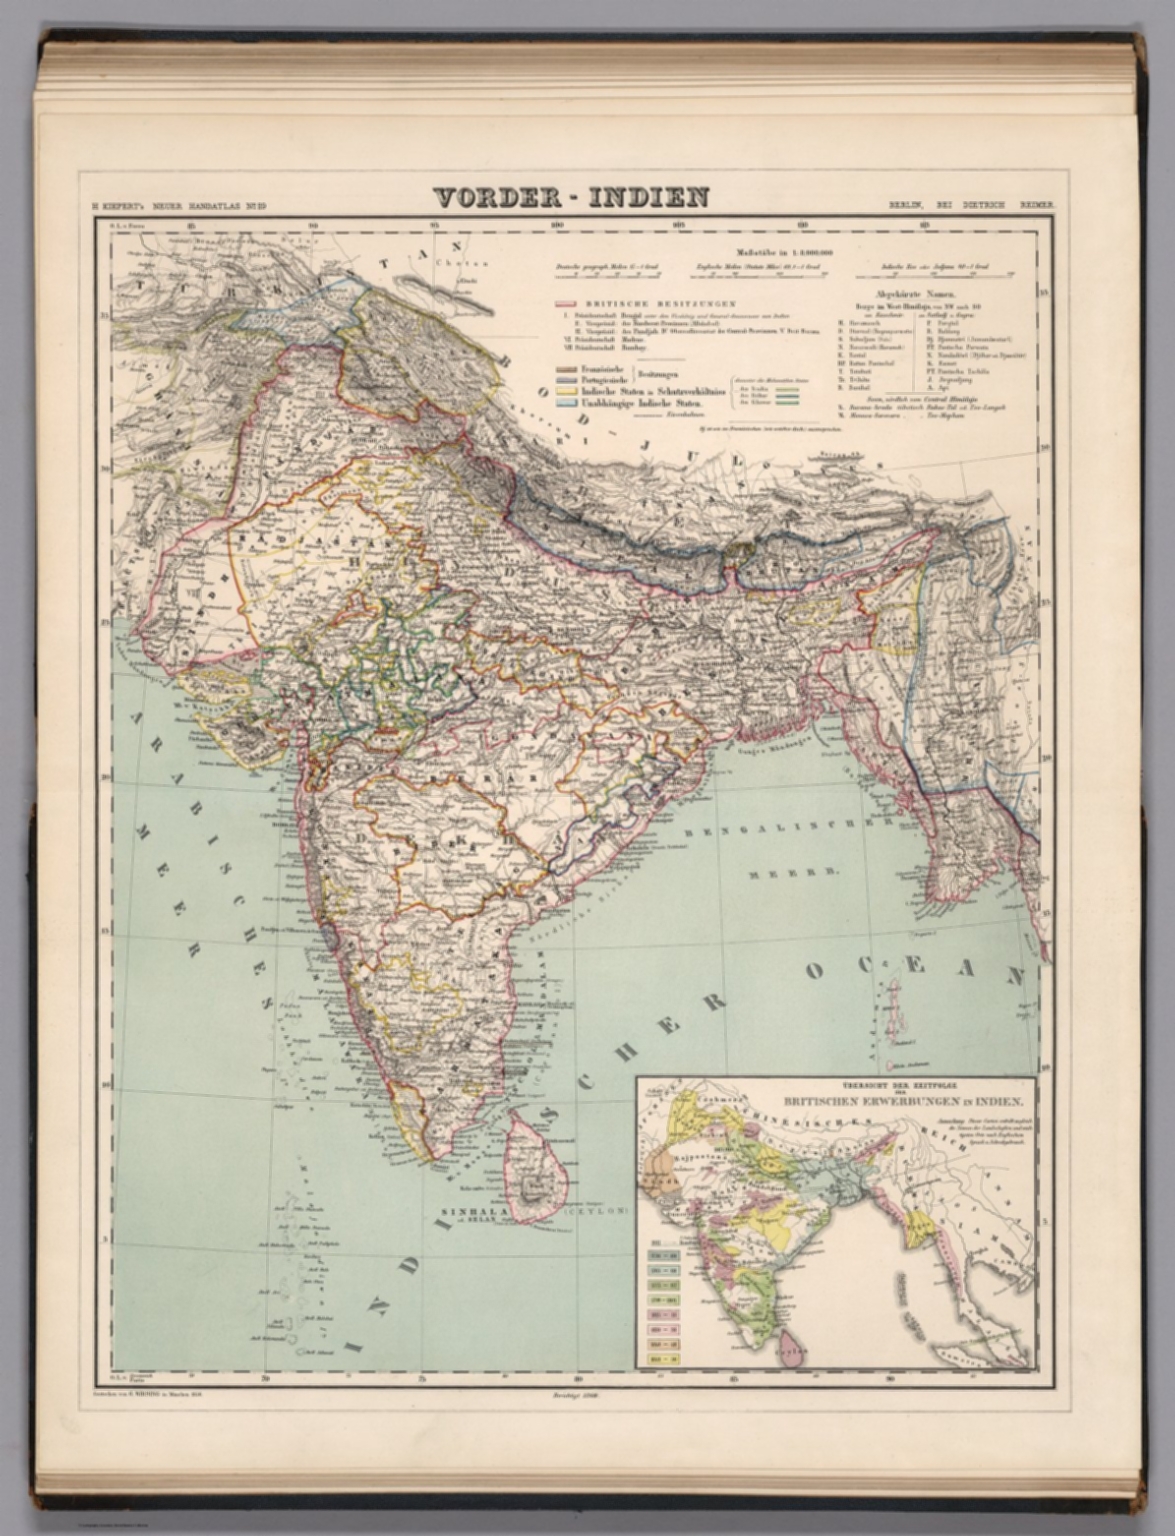 Vorder-Indien - David Rumsey Historical Map Collection